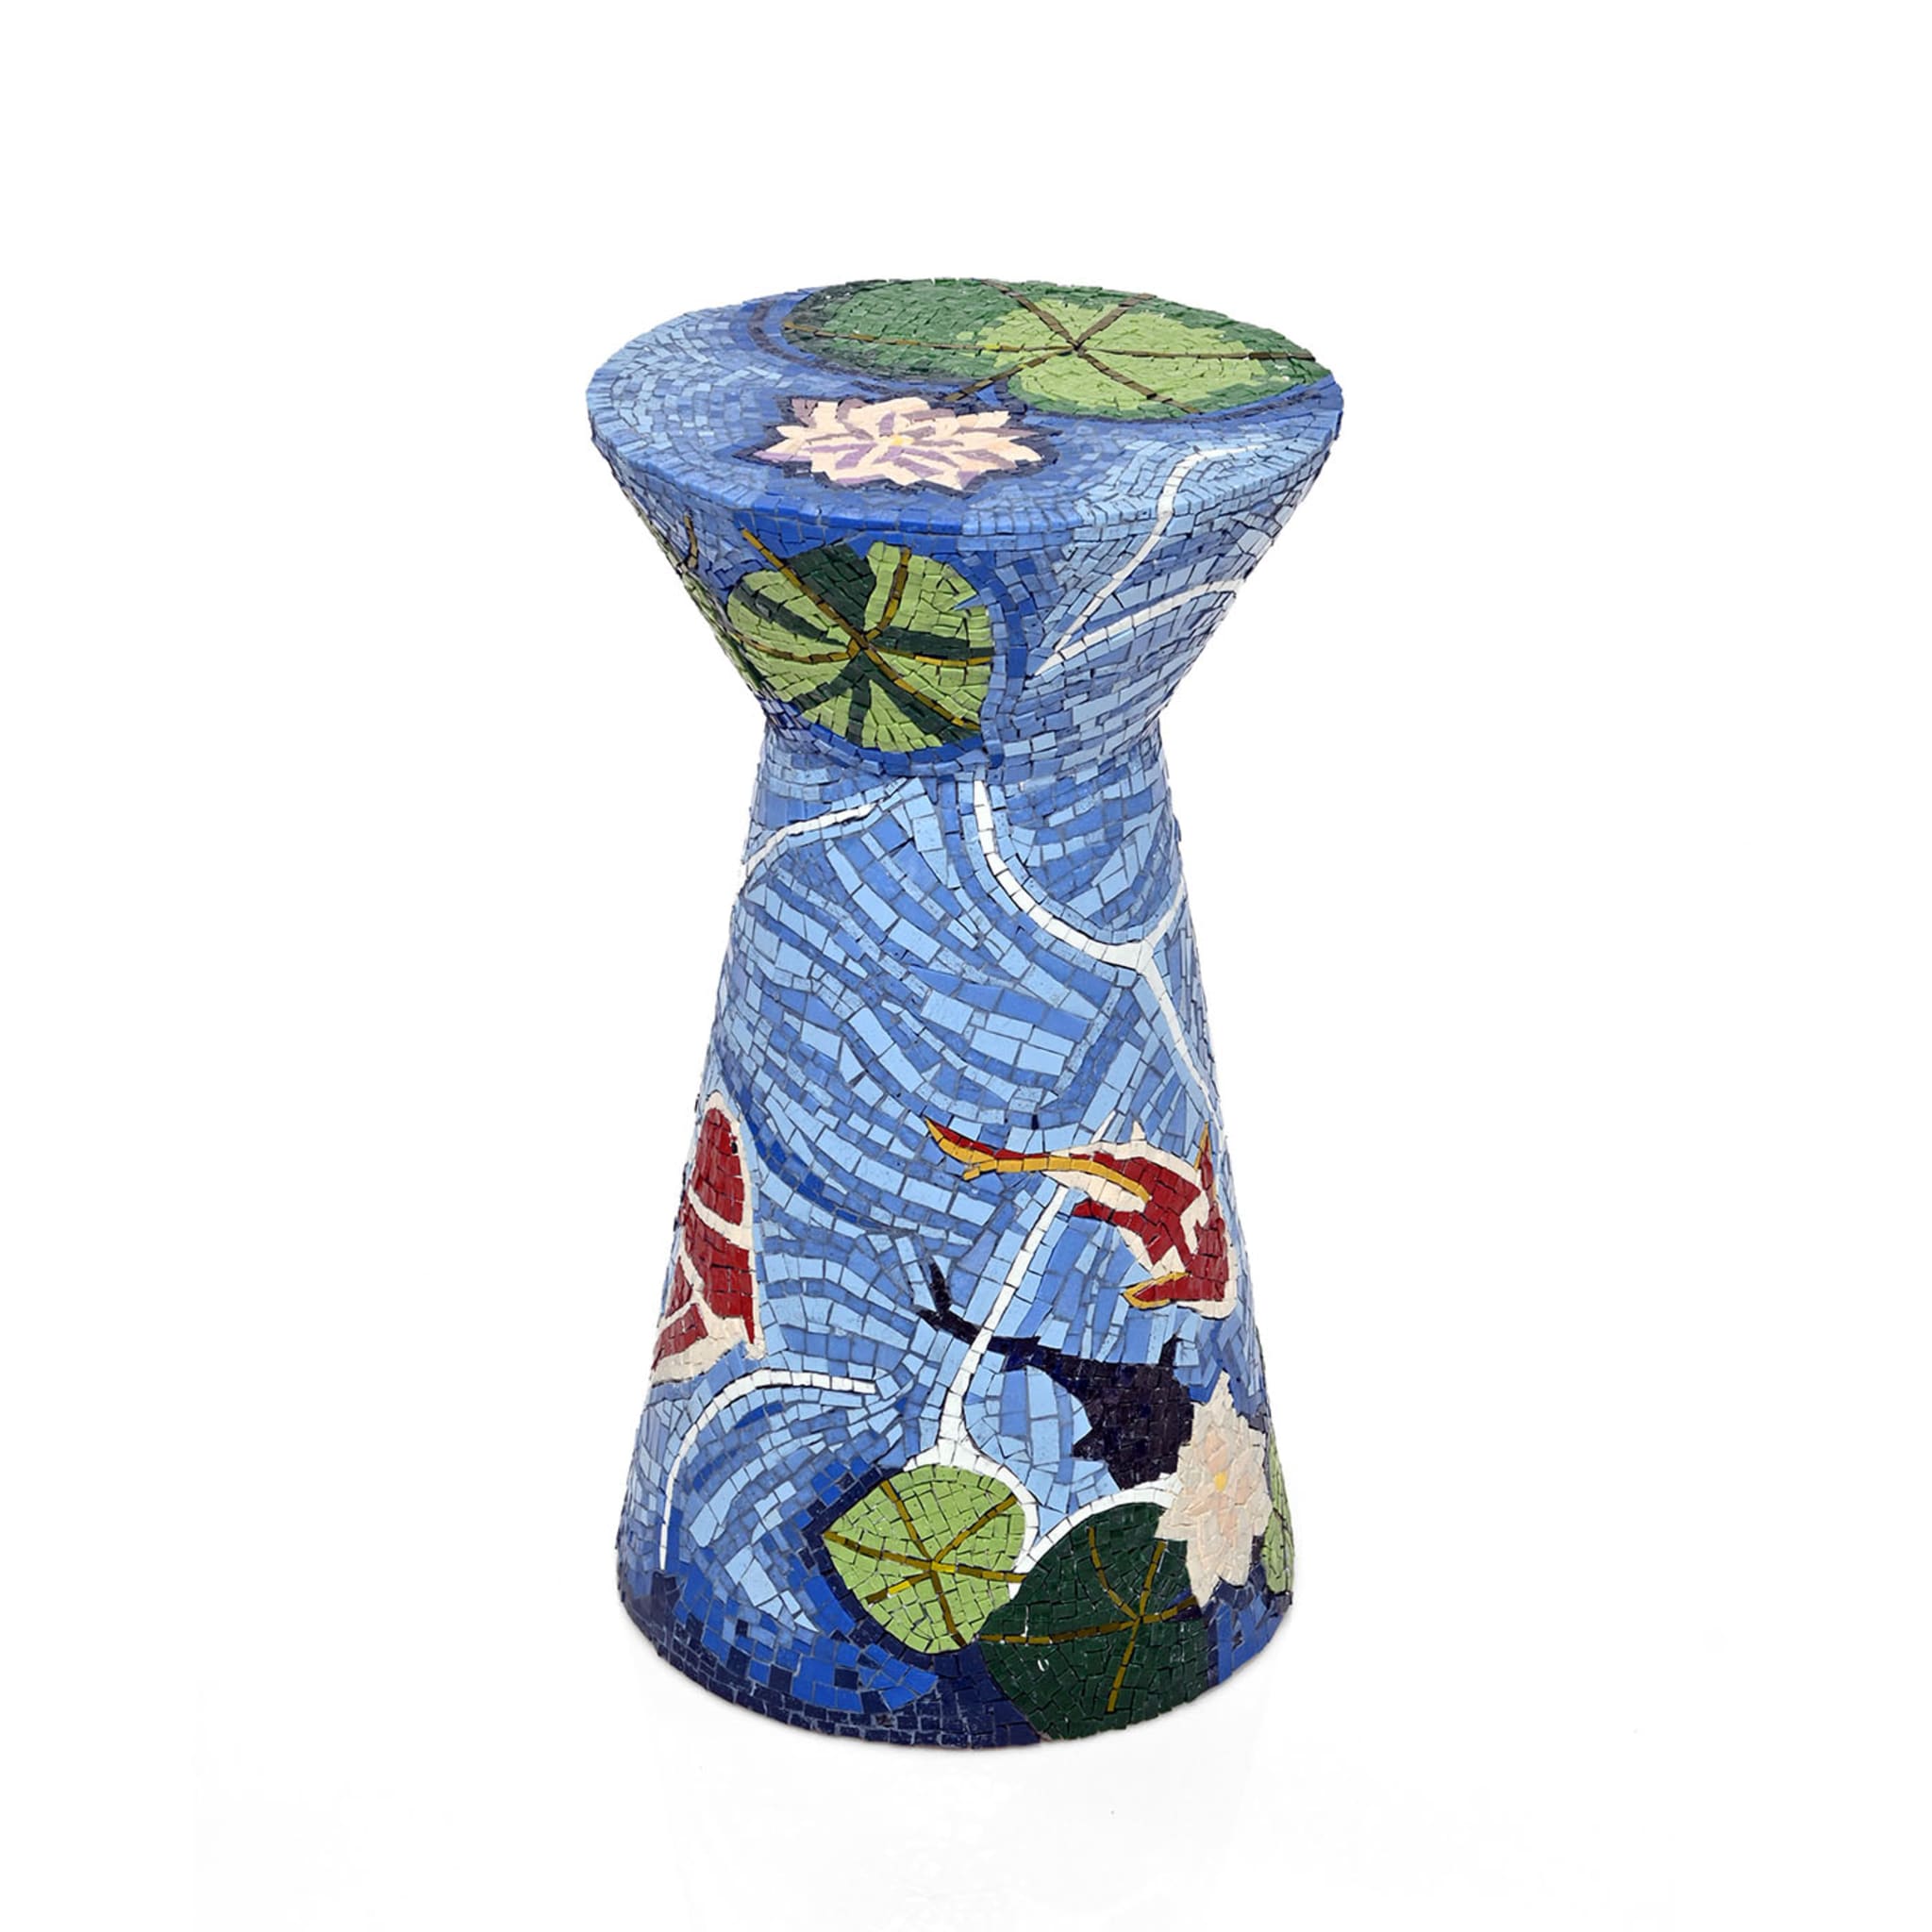 Carpe Diem Handmade Mosaic Stool By Michela Nardin - Alternative view 1